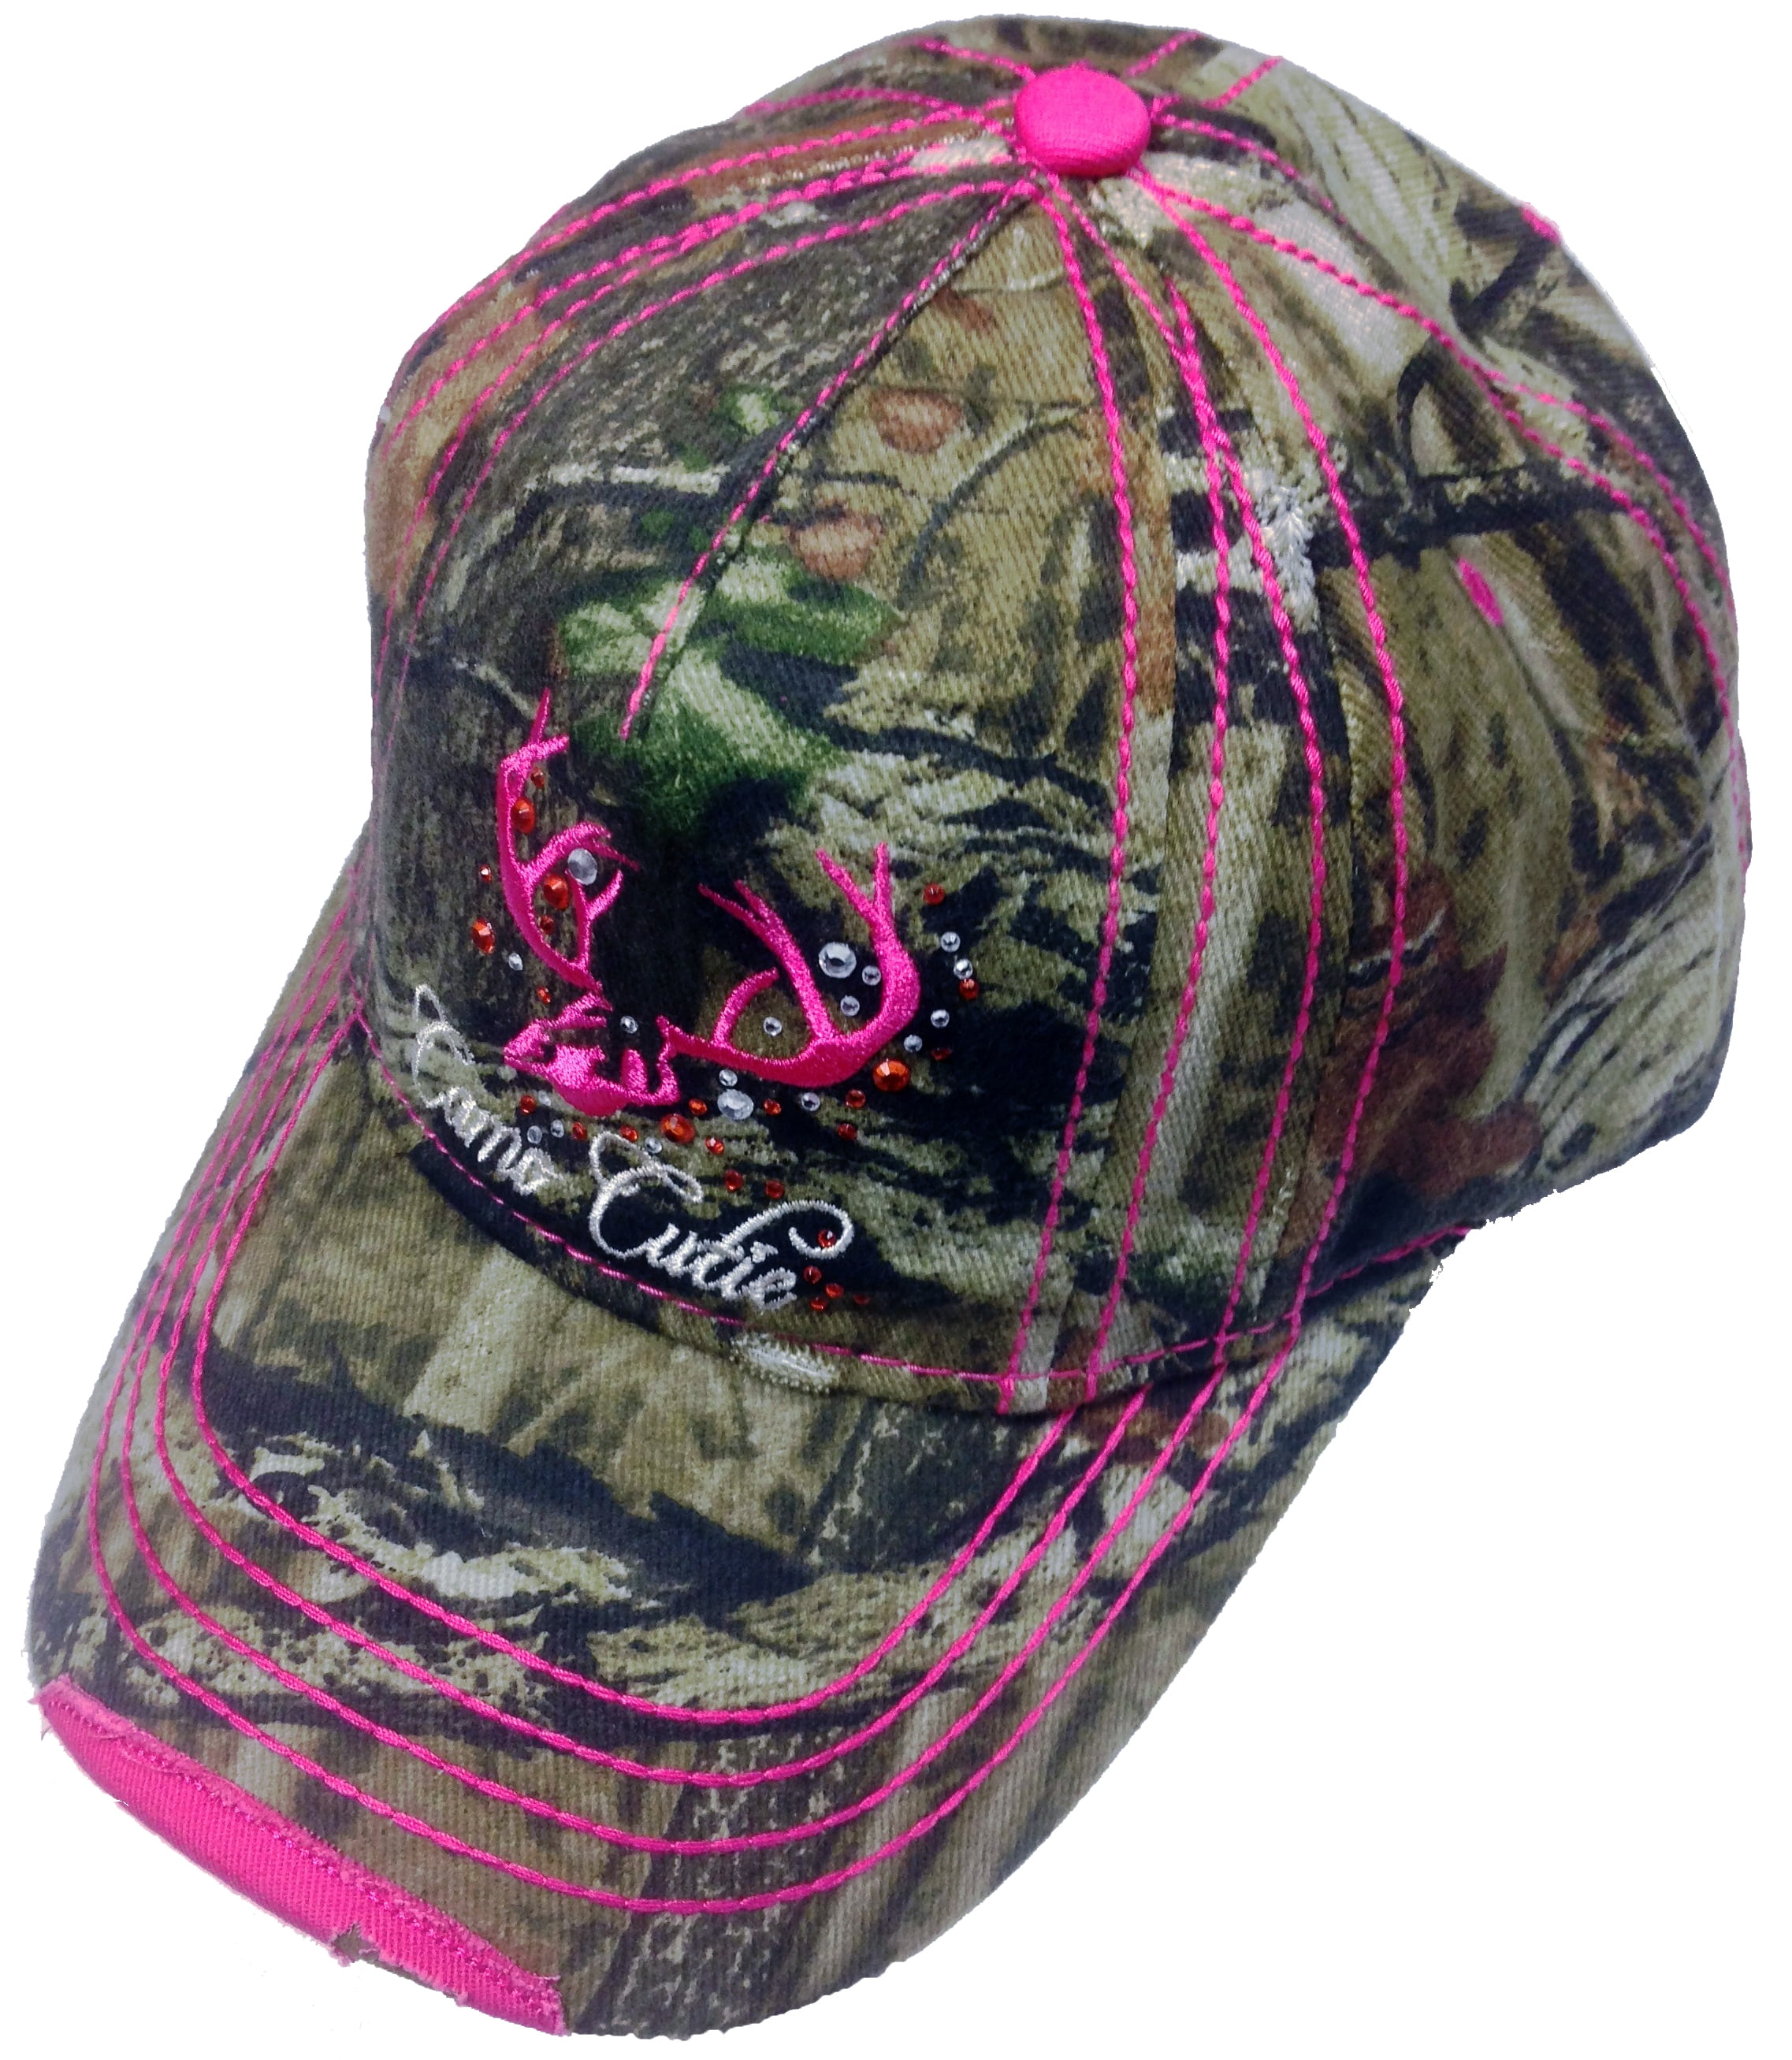 NEW Mossy Oak Slouch Hat Cap Camo Adjustable Strap Camouflage Pink Women's OSFM 